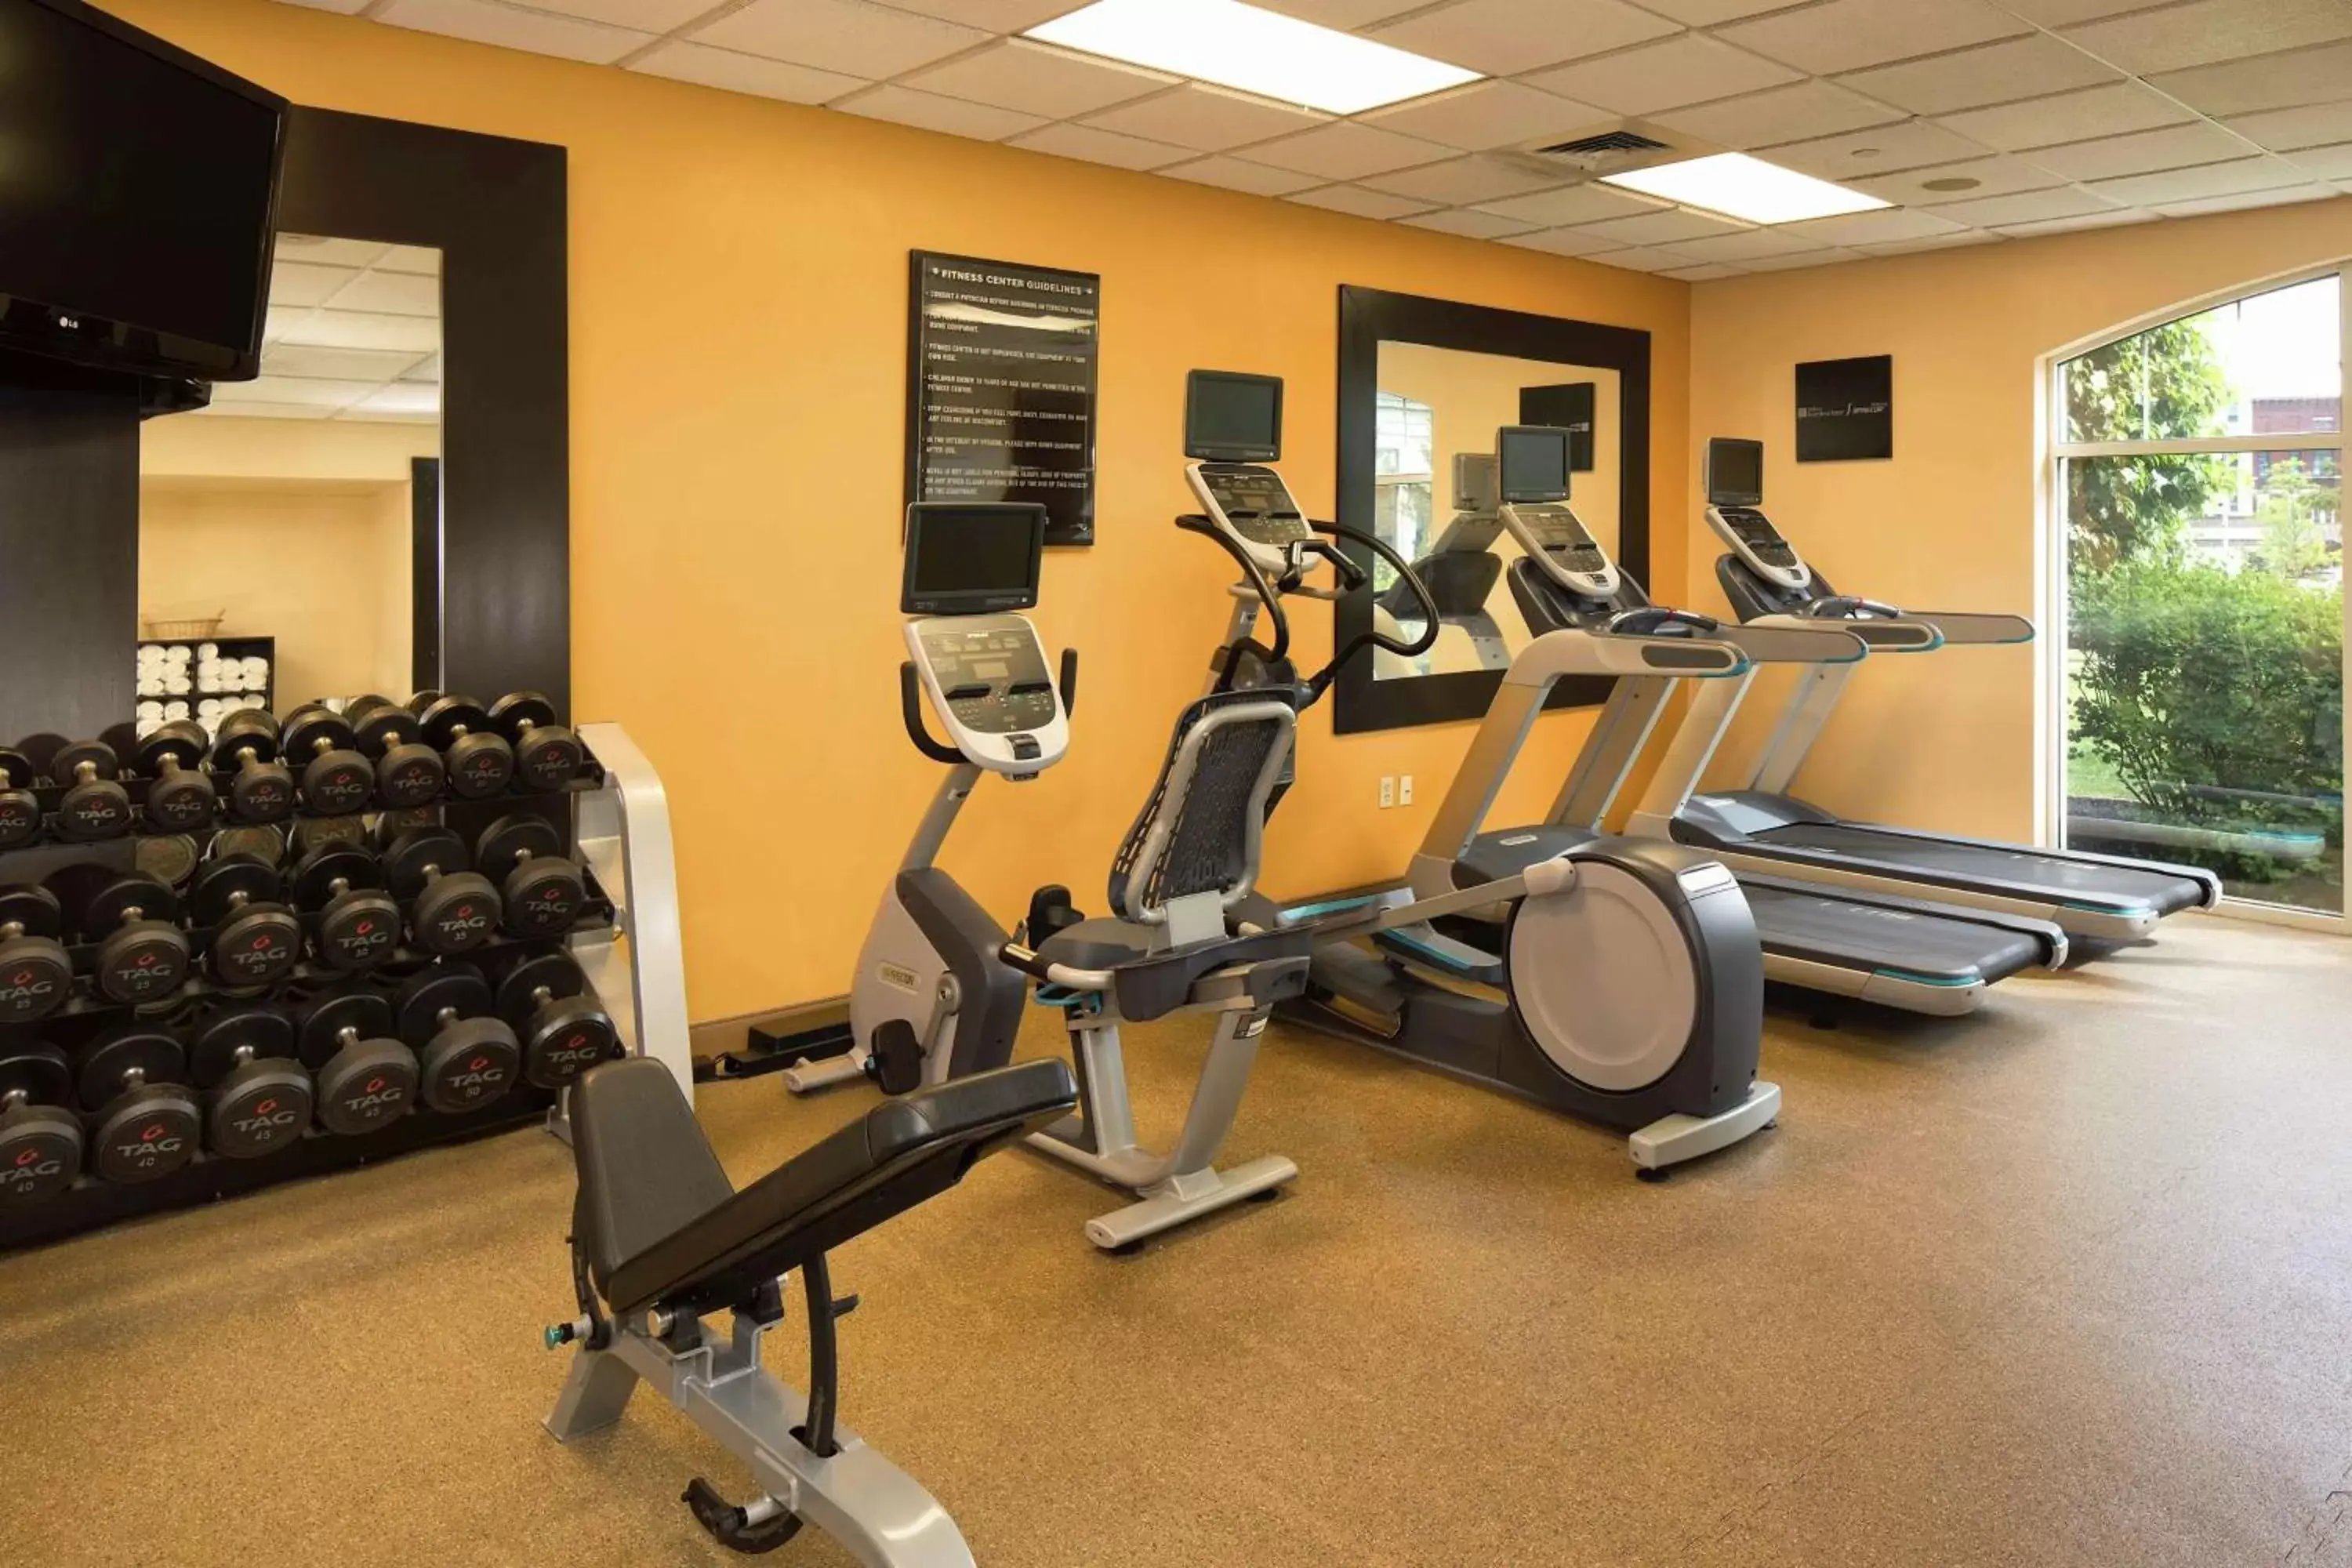 Fitness centre/facilities, Fitness Center/Facilities in Hilton Garden Inn Auburn Riverwatch